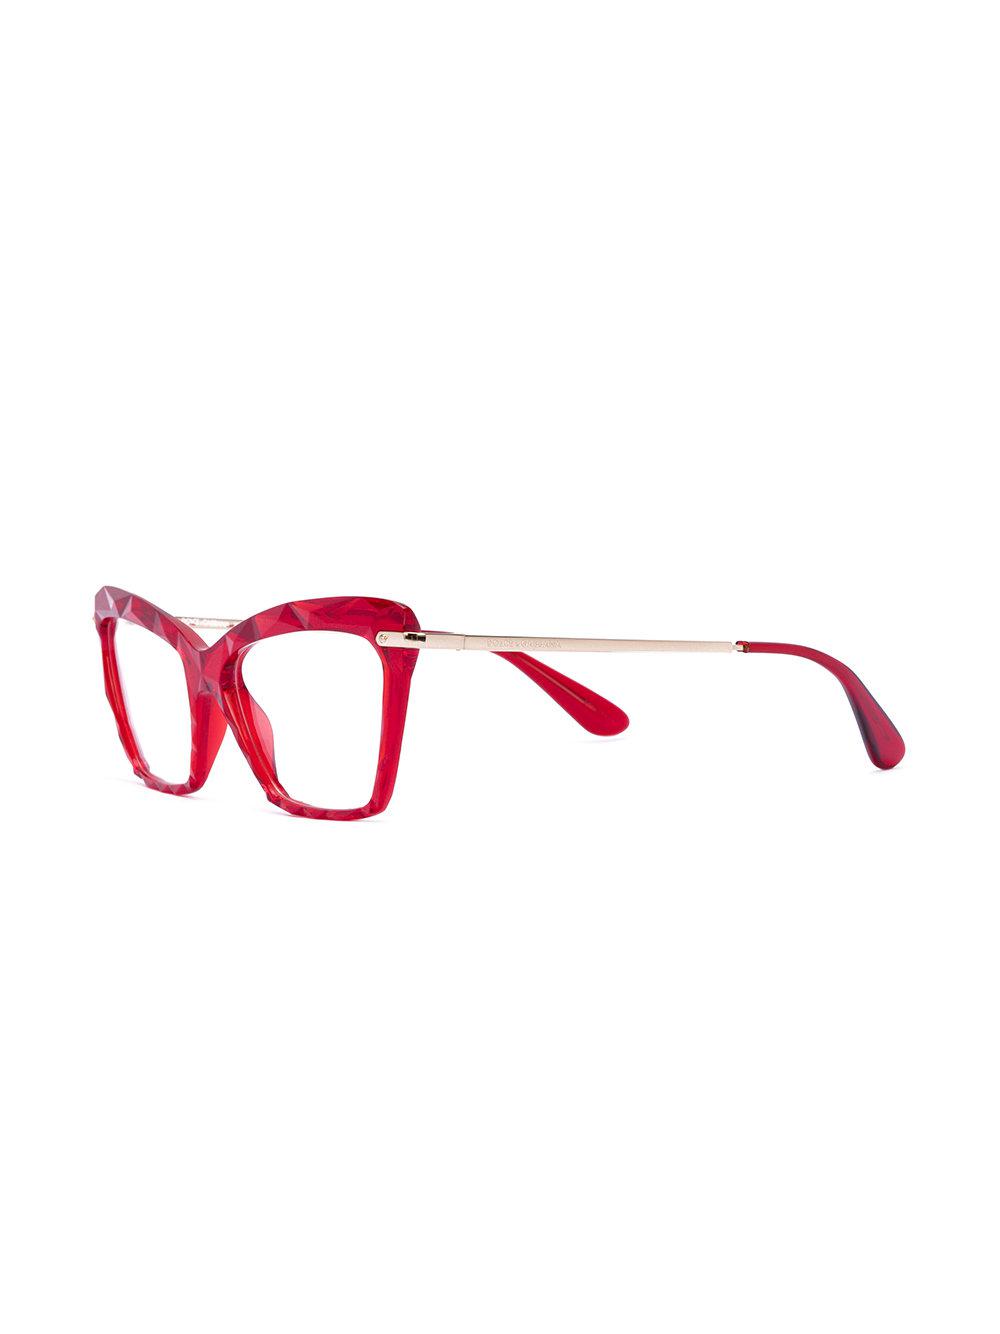 Dolce & Gabbana Cat Eye Glasses in Red - Lyst